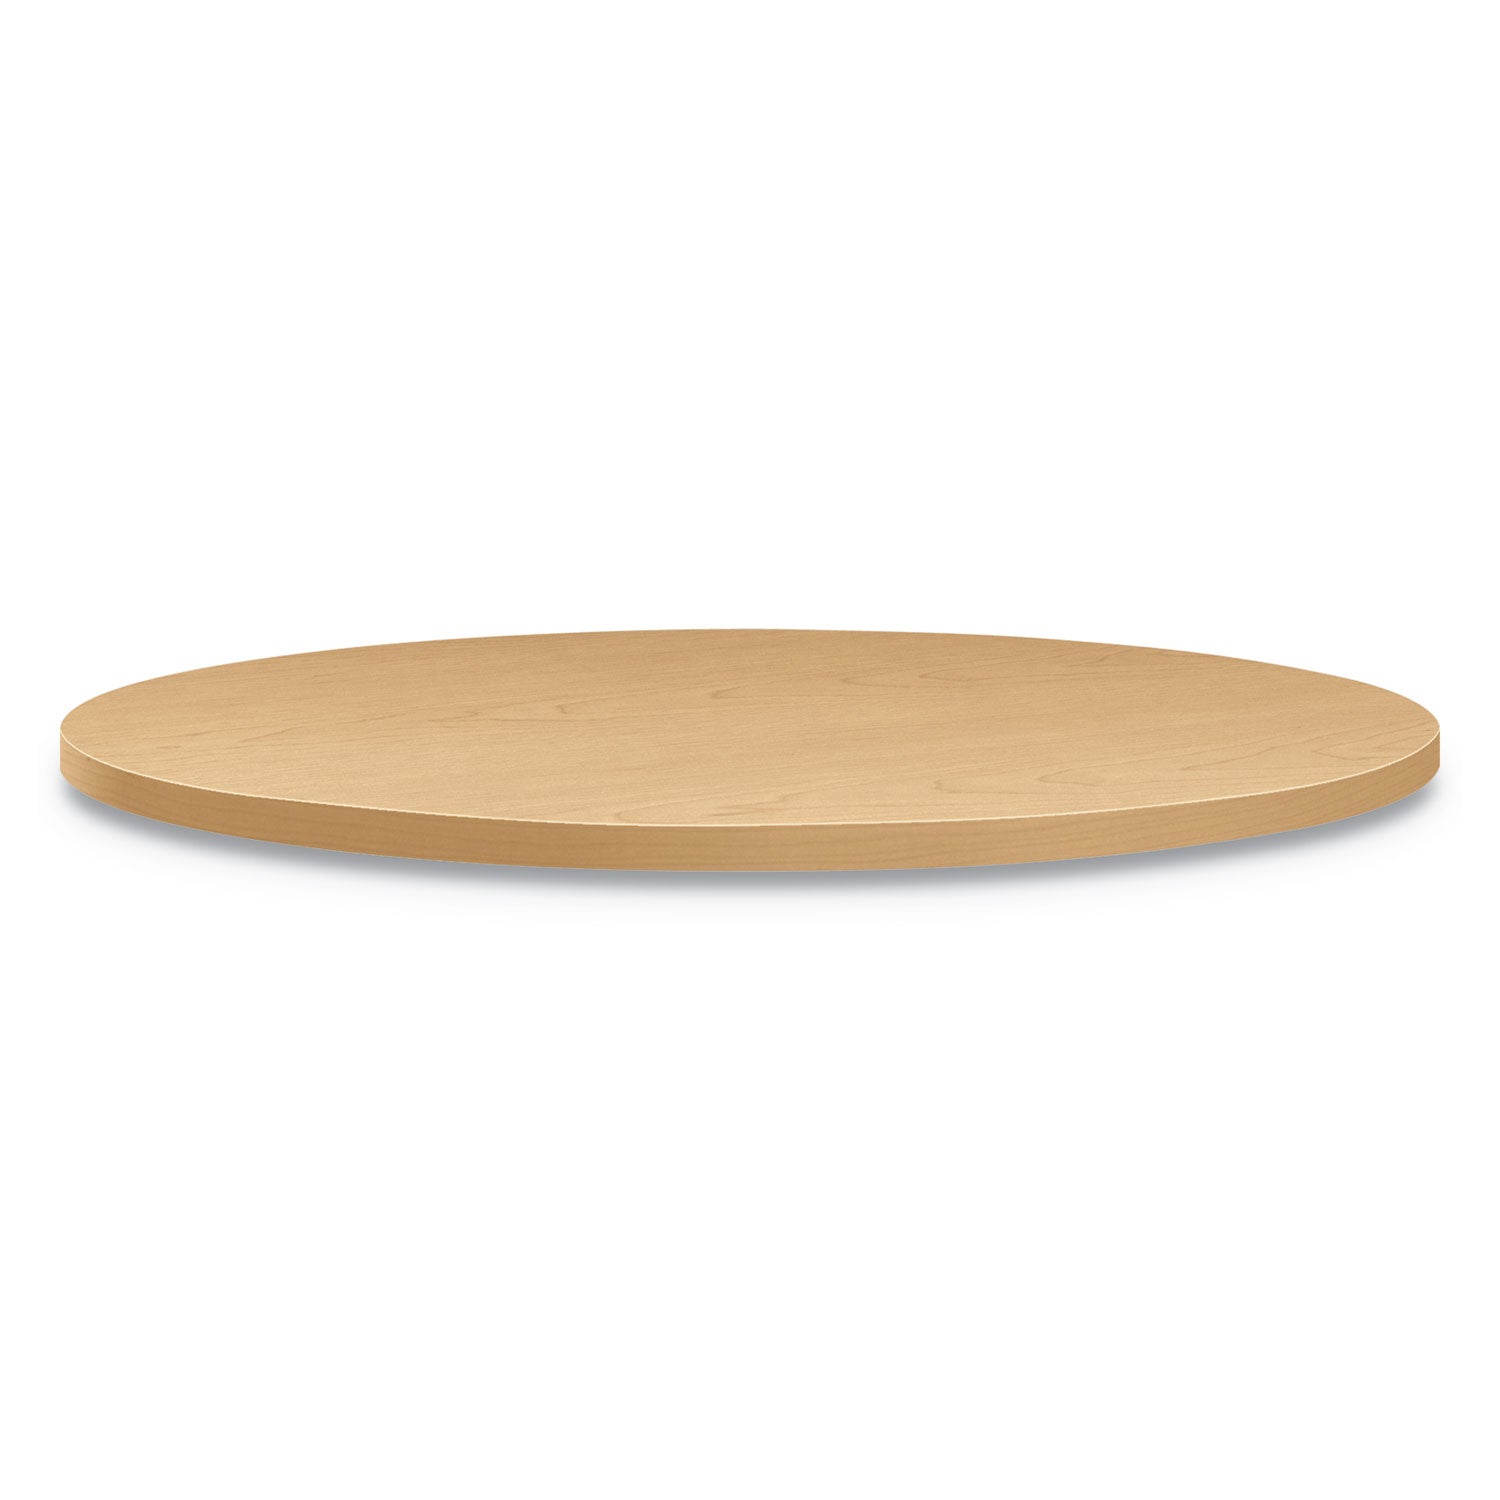 between-round-table-tops-30-diameter-natural-maple_honbtrnd30ndd - 1